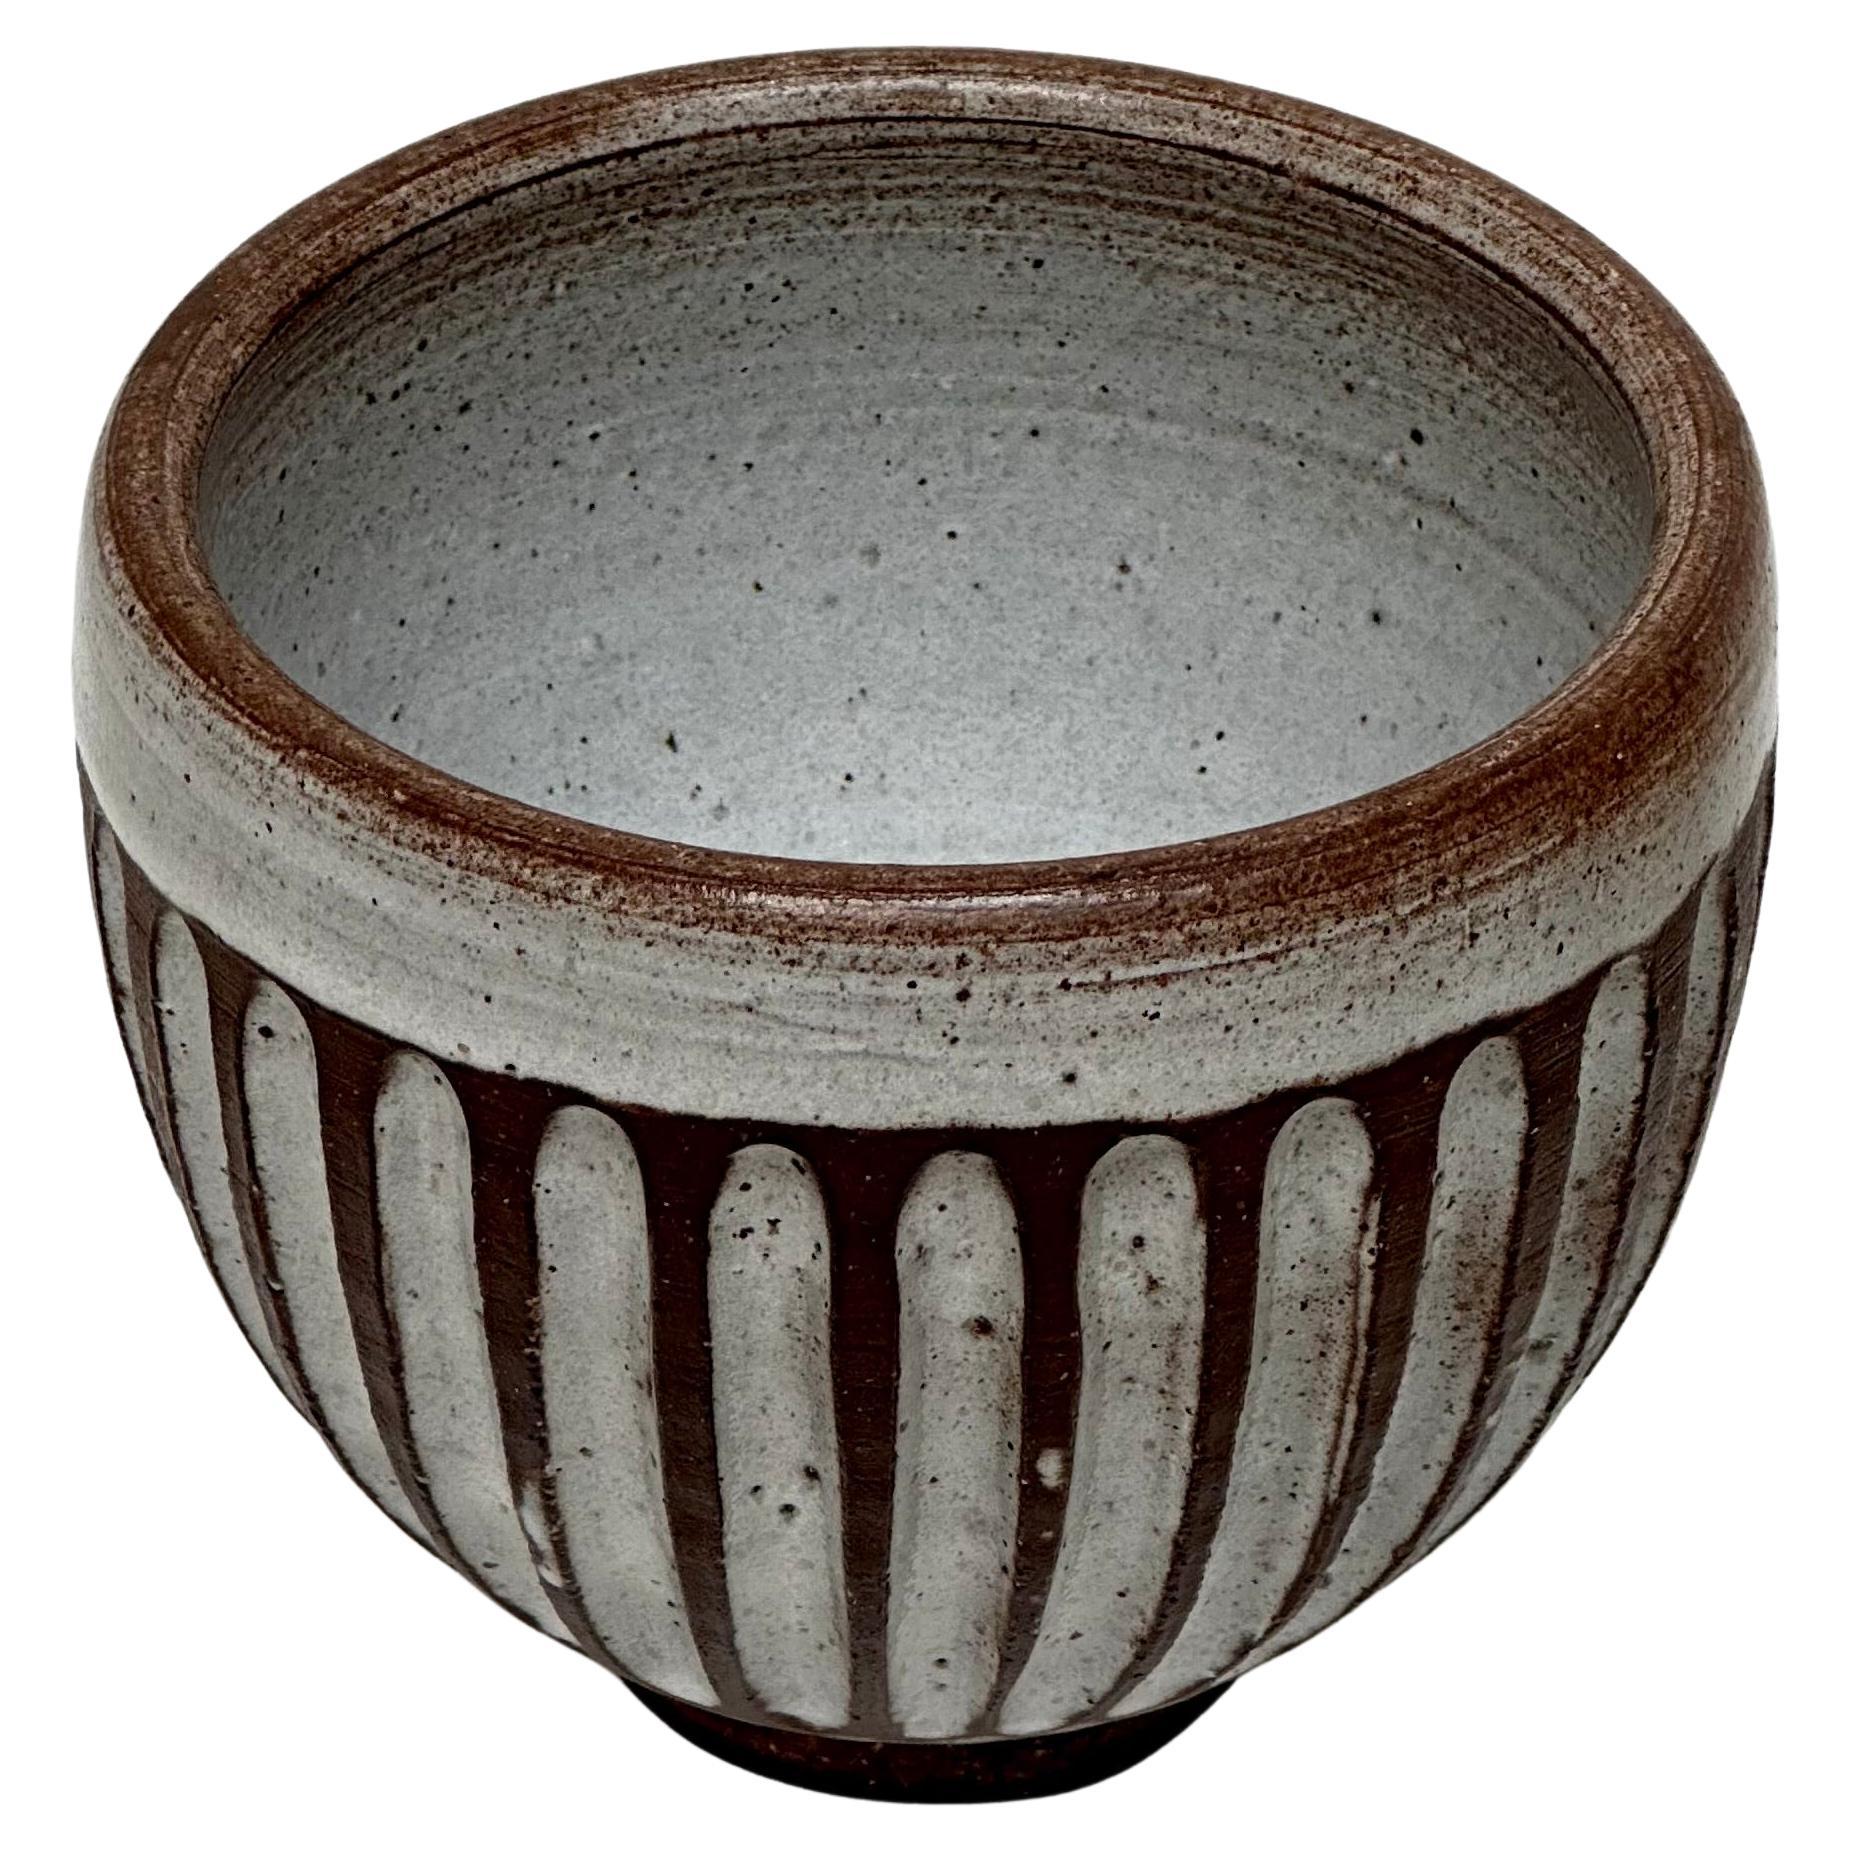 Scarified Stoneware Bowl, Pol Chambost, France c. 1960